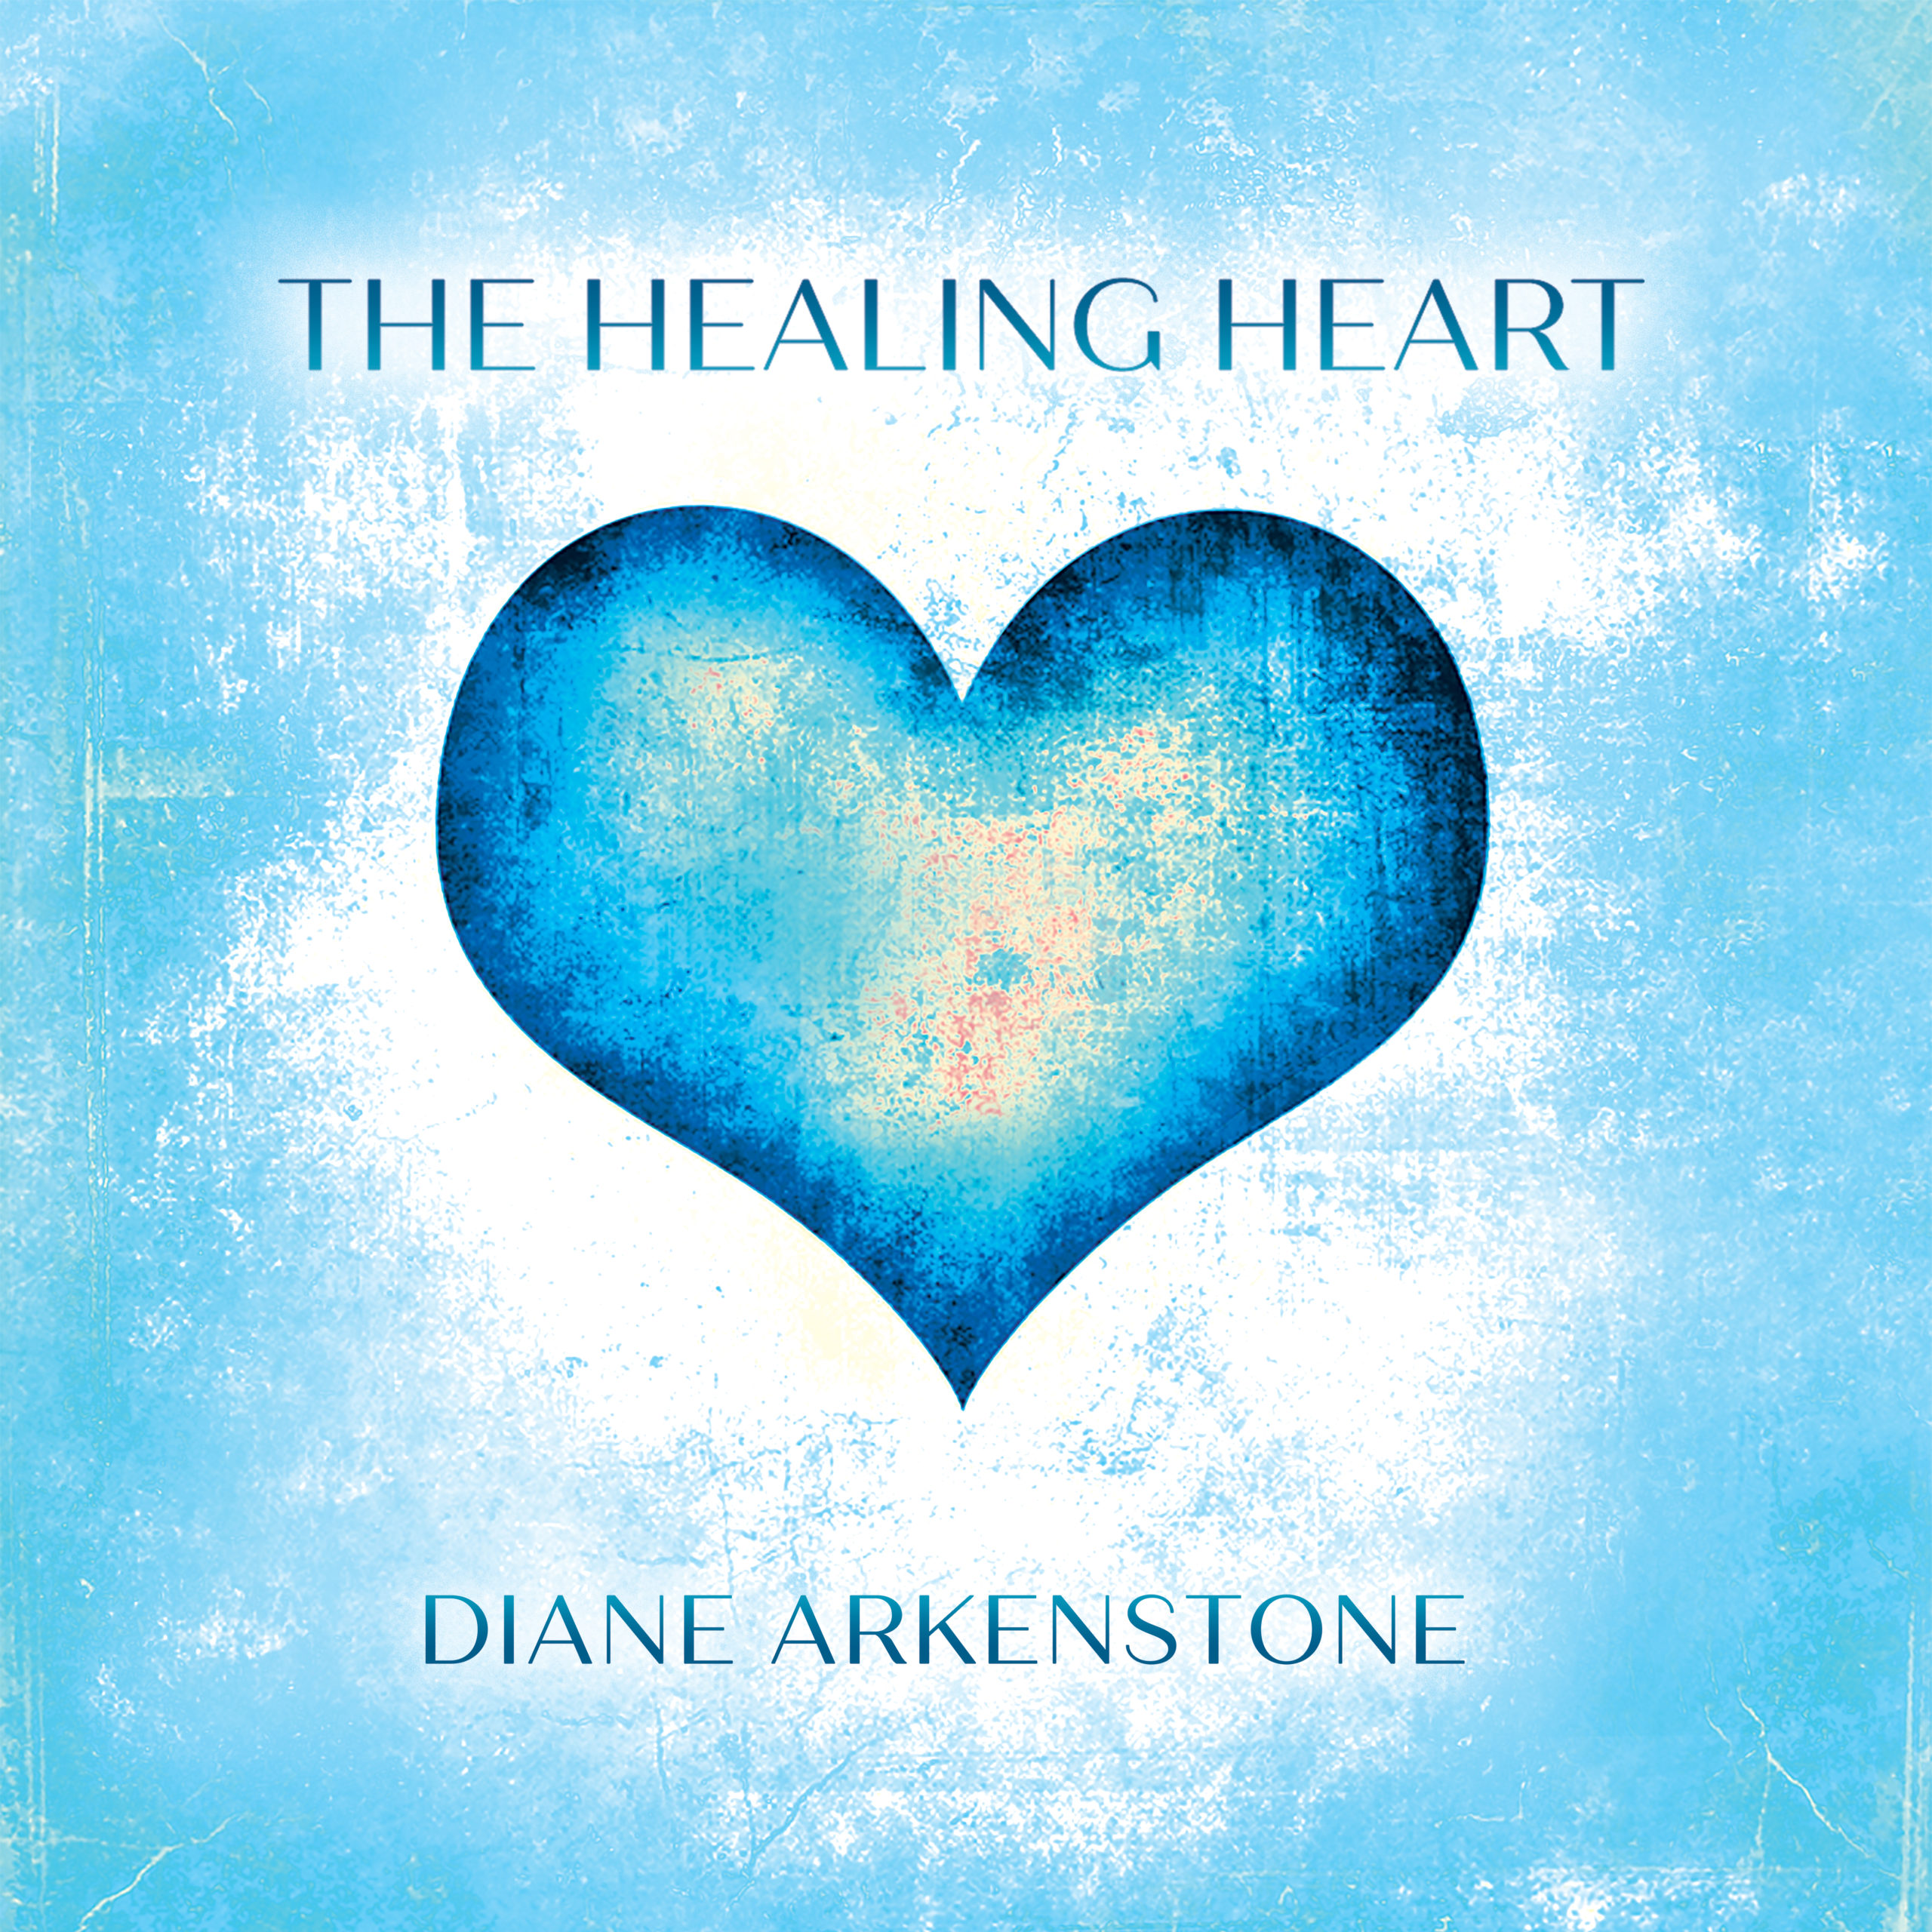 The Healing Heart Song by Diane Arkenstone Artwork